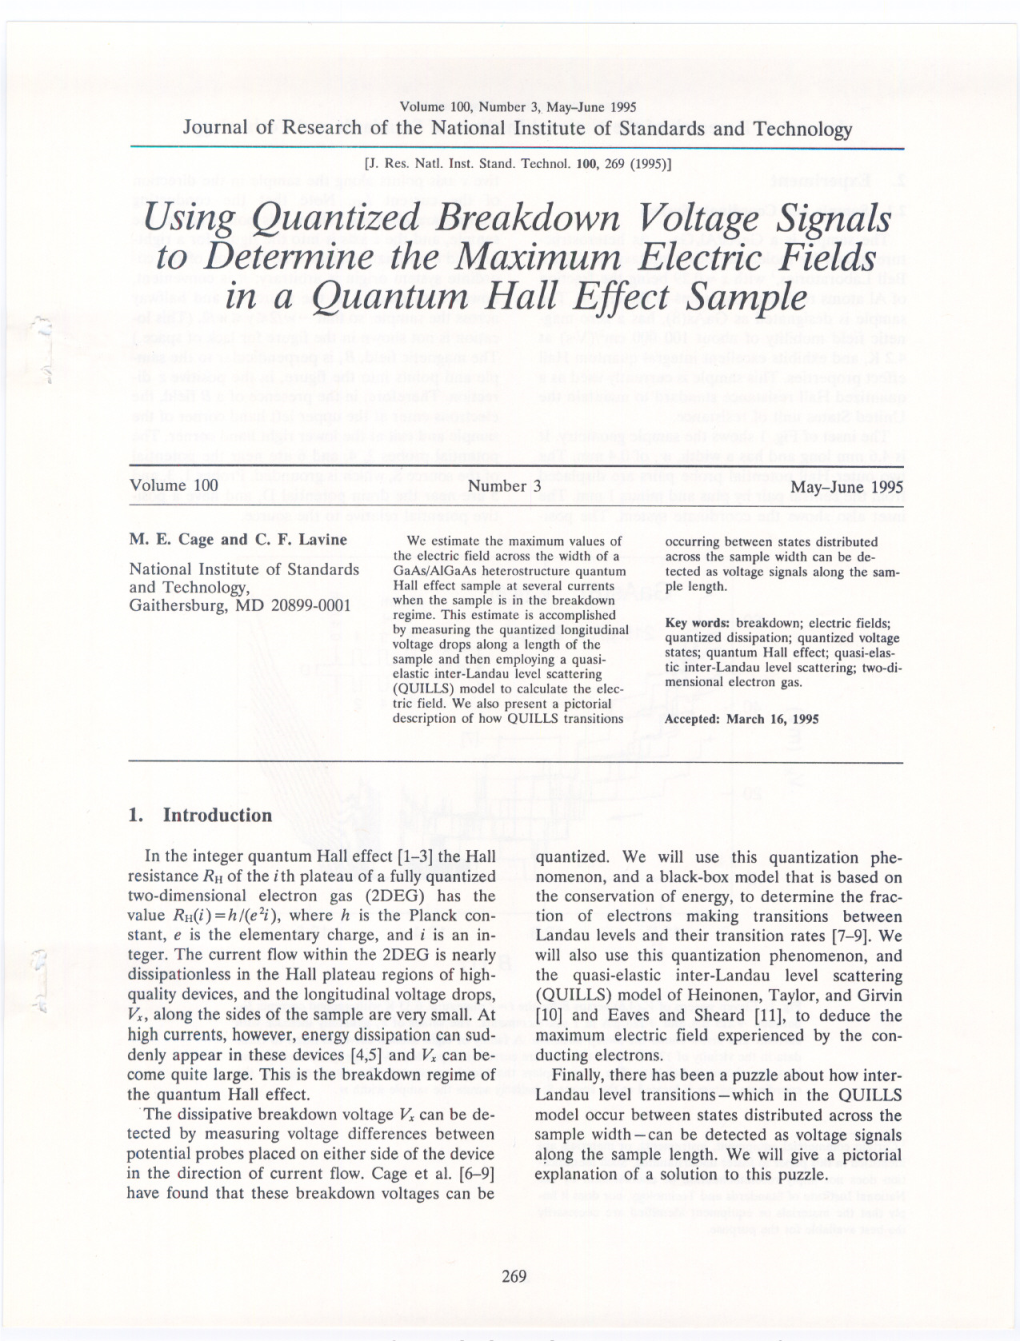 Using Quantized Breakdown Voltage Signals to Determine the Maximum Electric Fields in a Quantum Hall Effect Sample